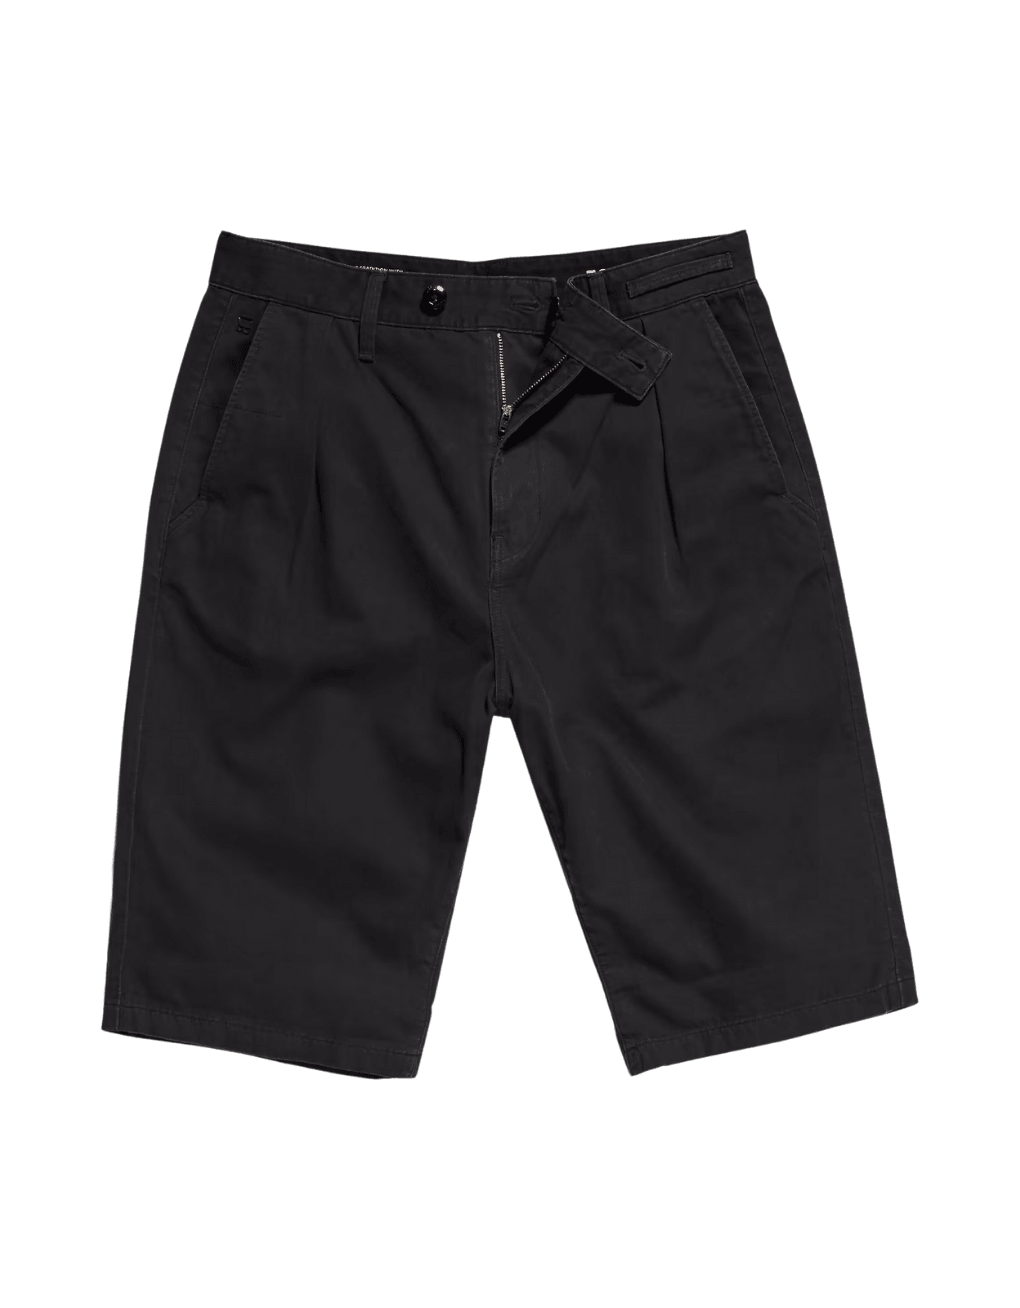 Shorts Worker Chino Dark Black - ECRU